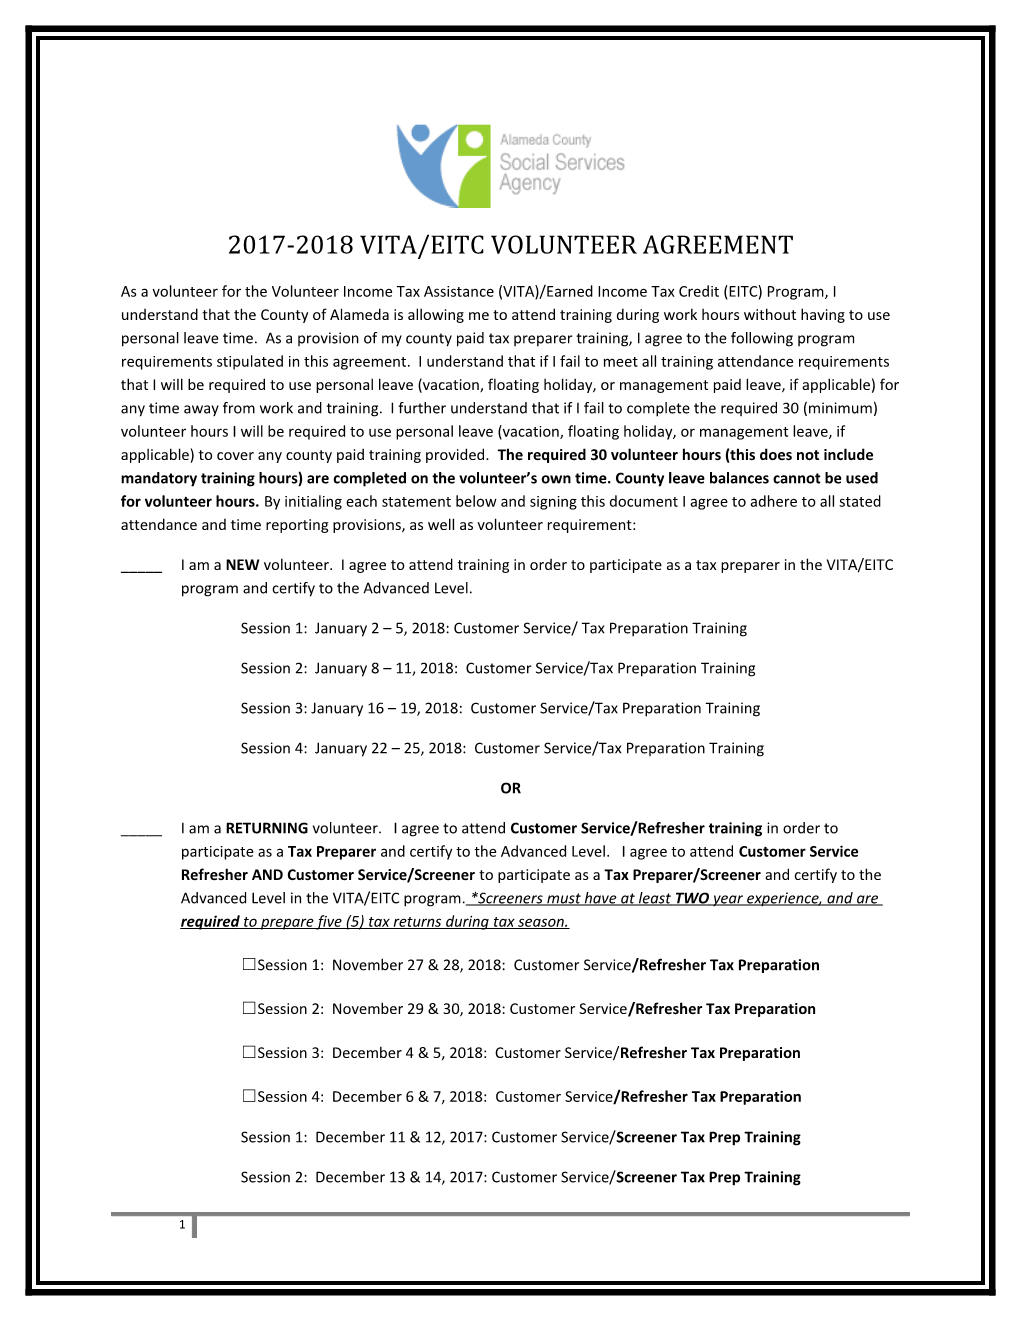 2017-2018 Vita/Eitc Volunteer Agreement